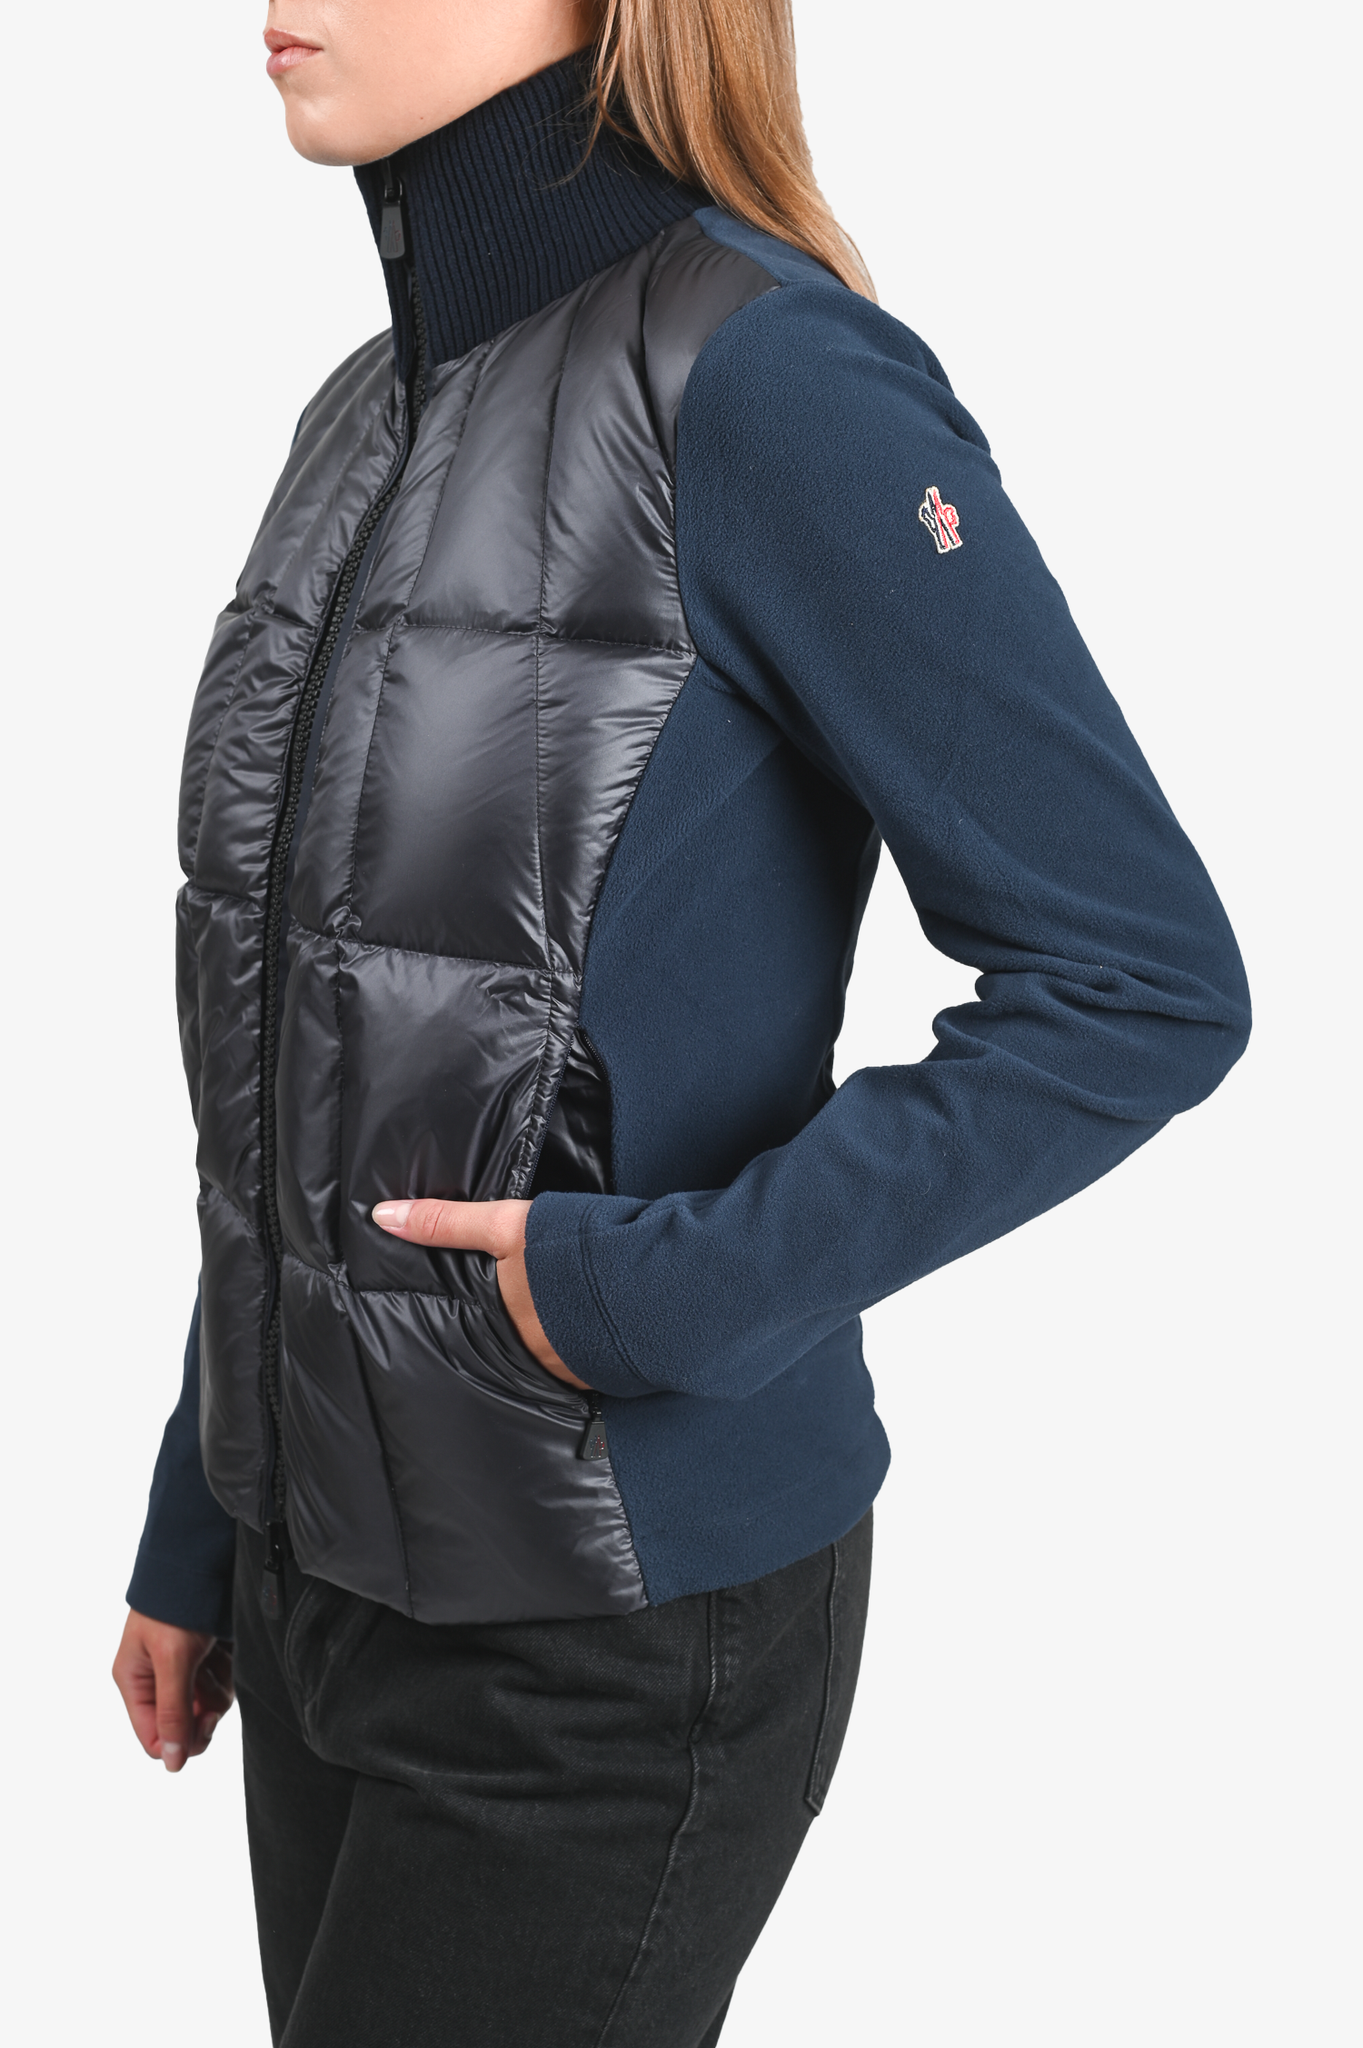 Moncler Navy Cardigan 'Maglia' Down Jacket Size L